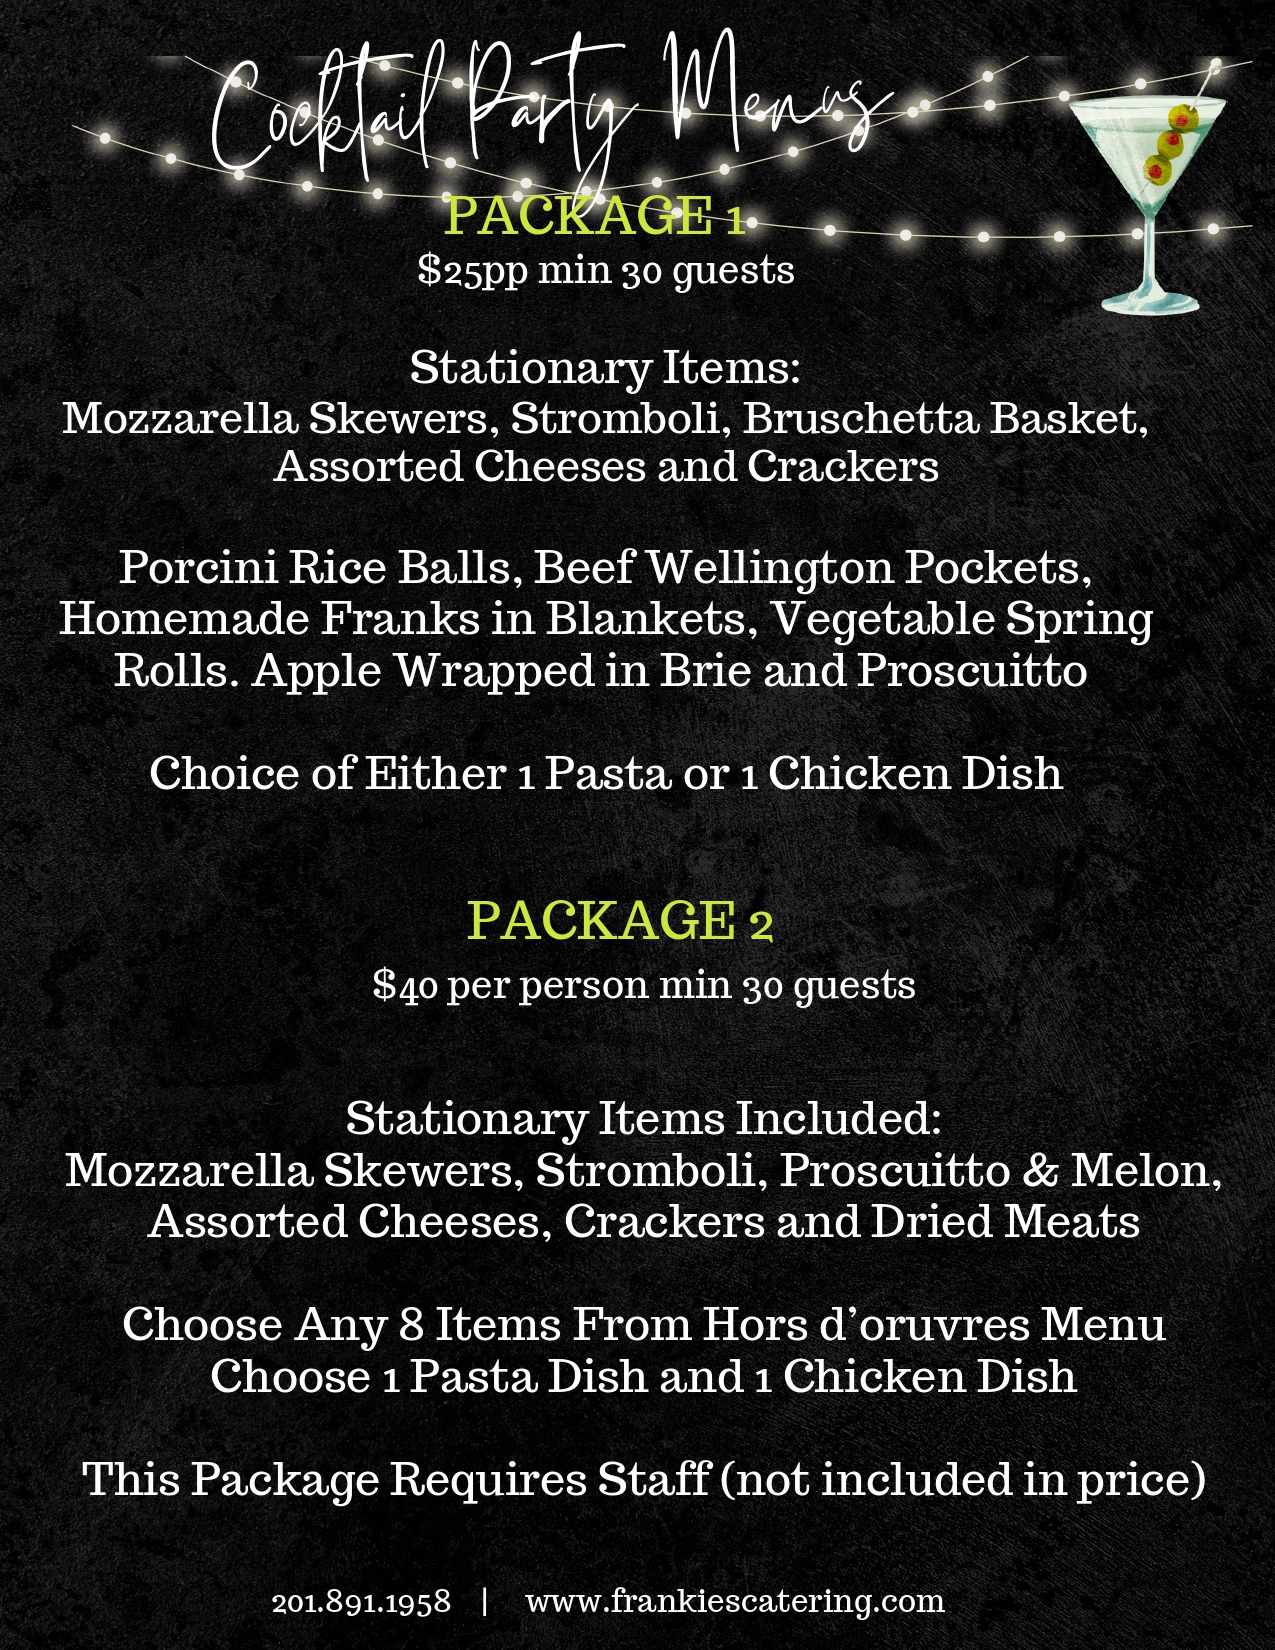 A menu of the restaurant moscato